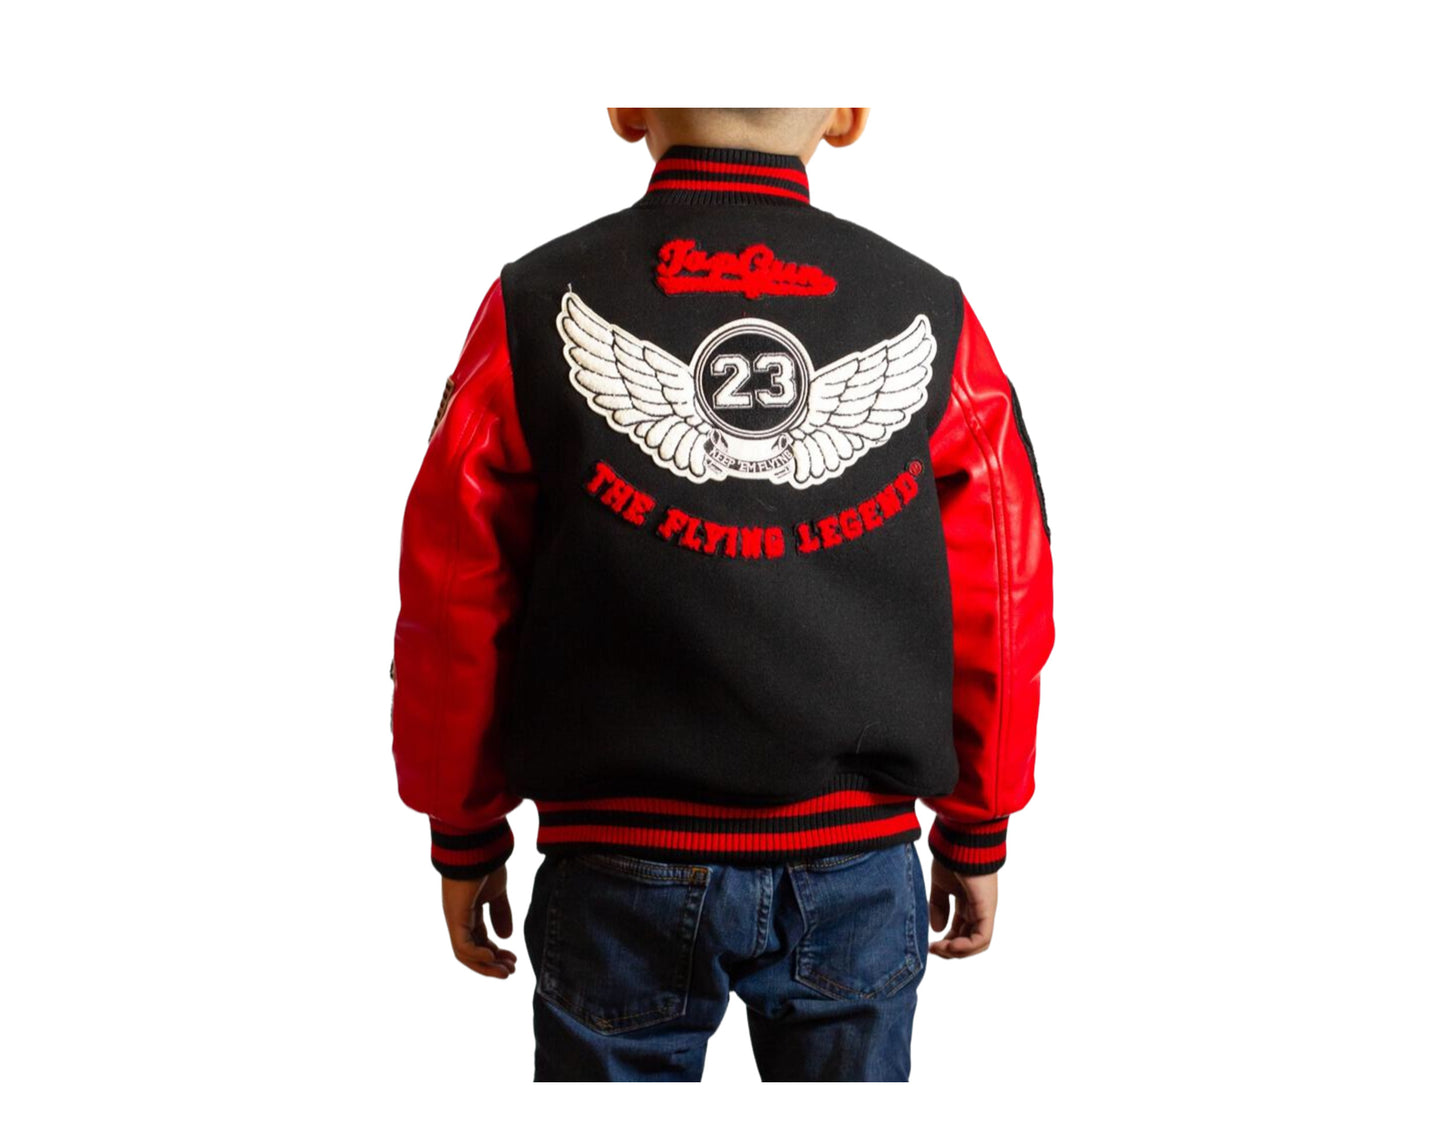 Top Gun The Flying Legend Varsity Jacket Black